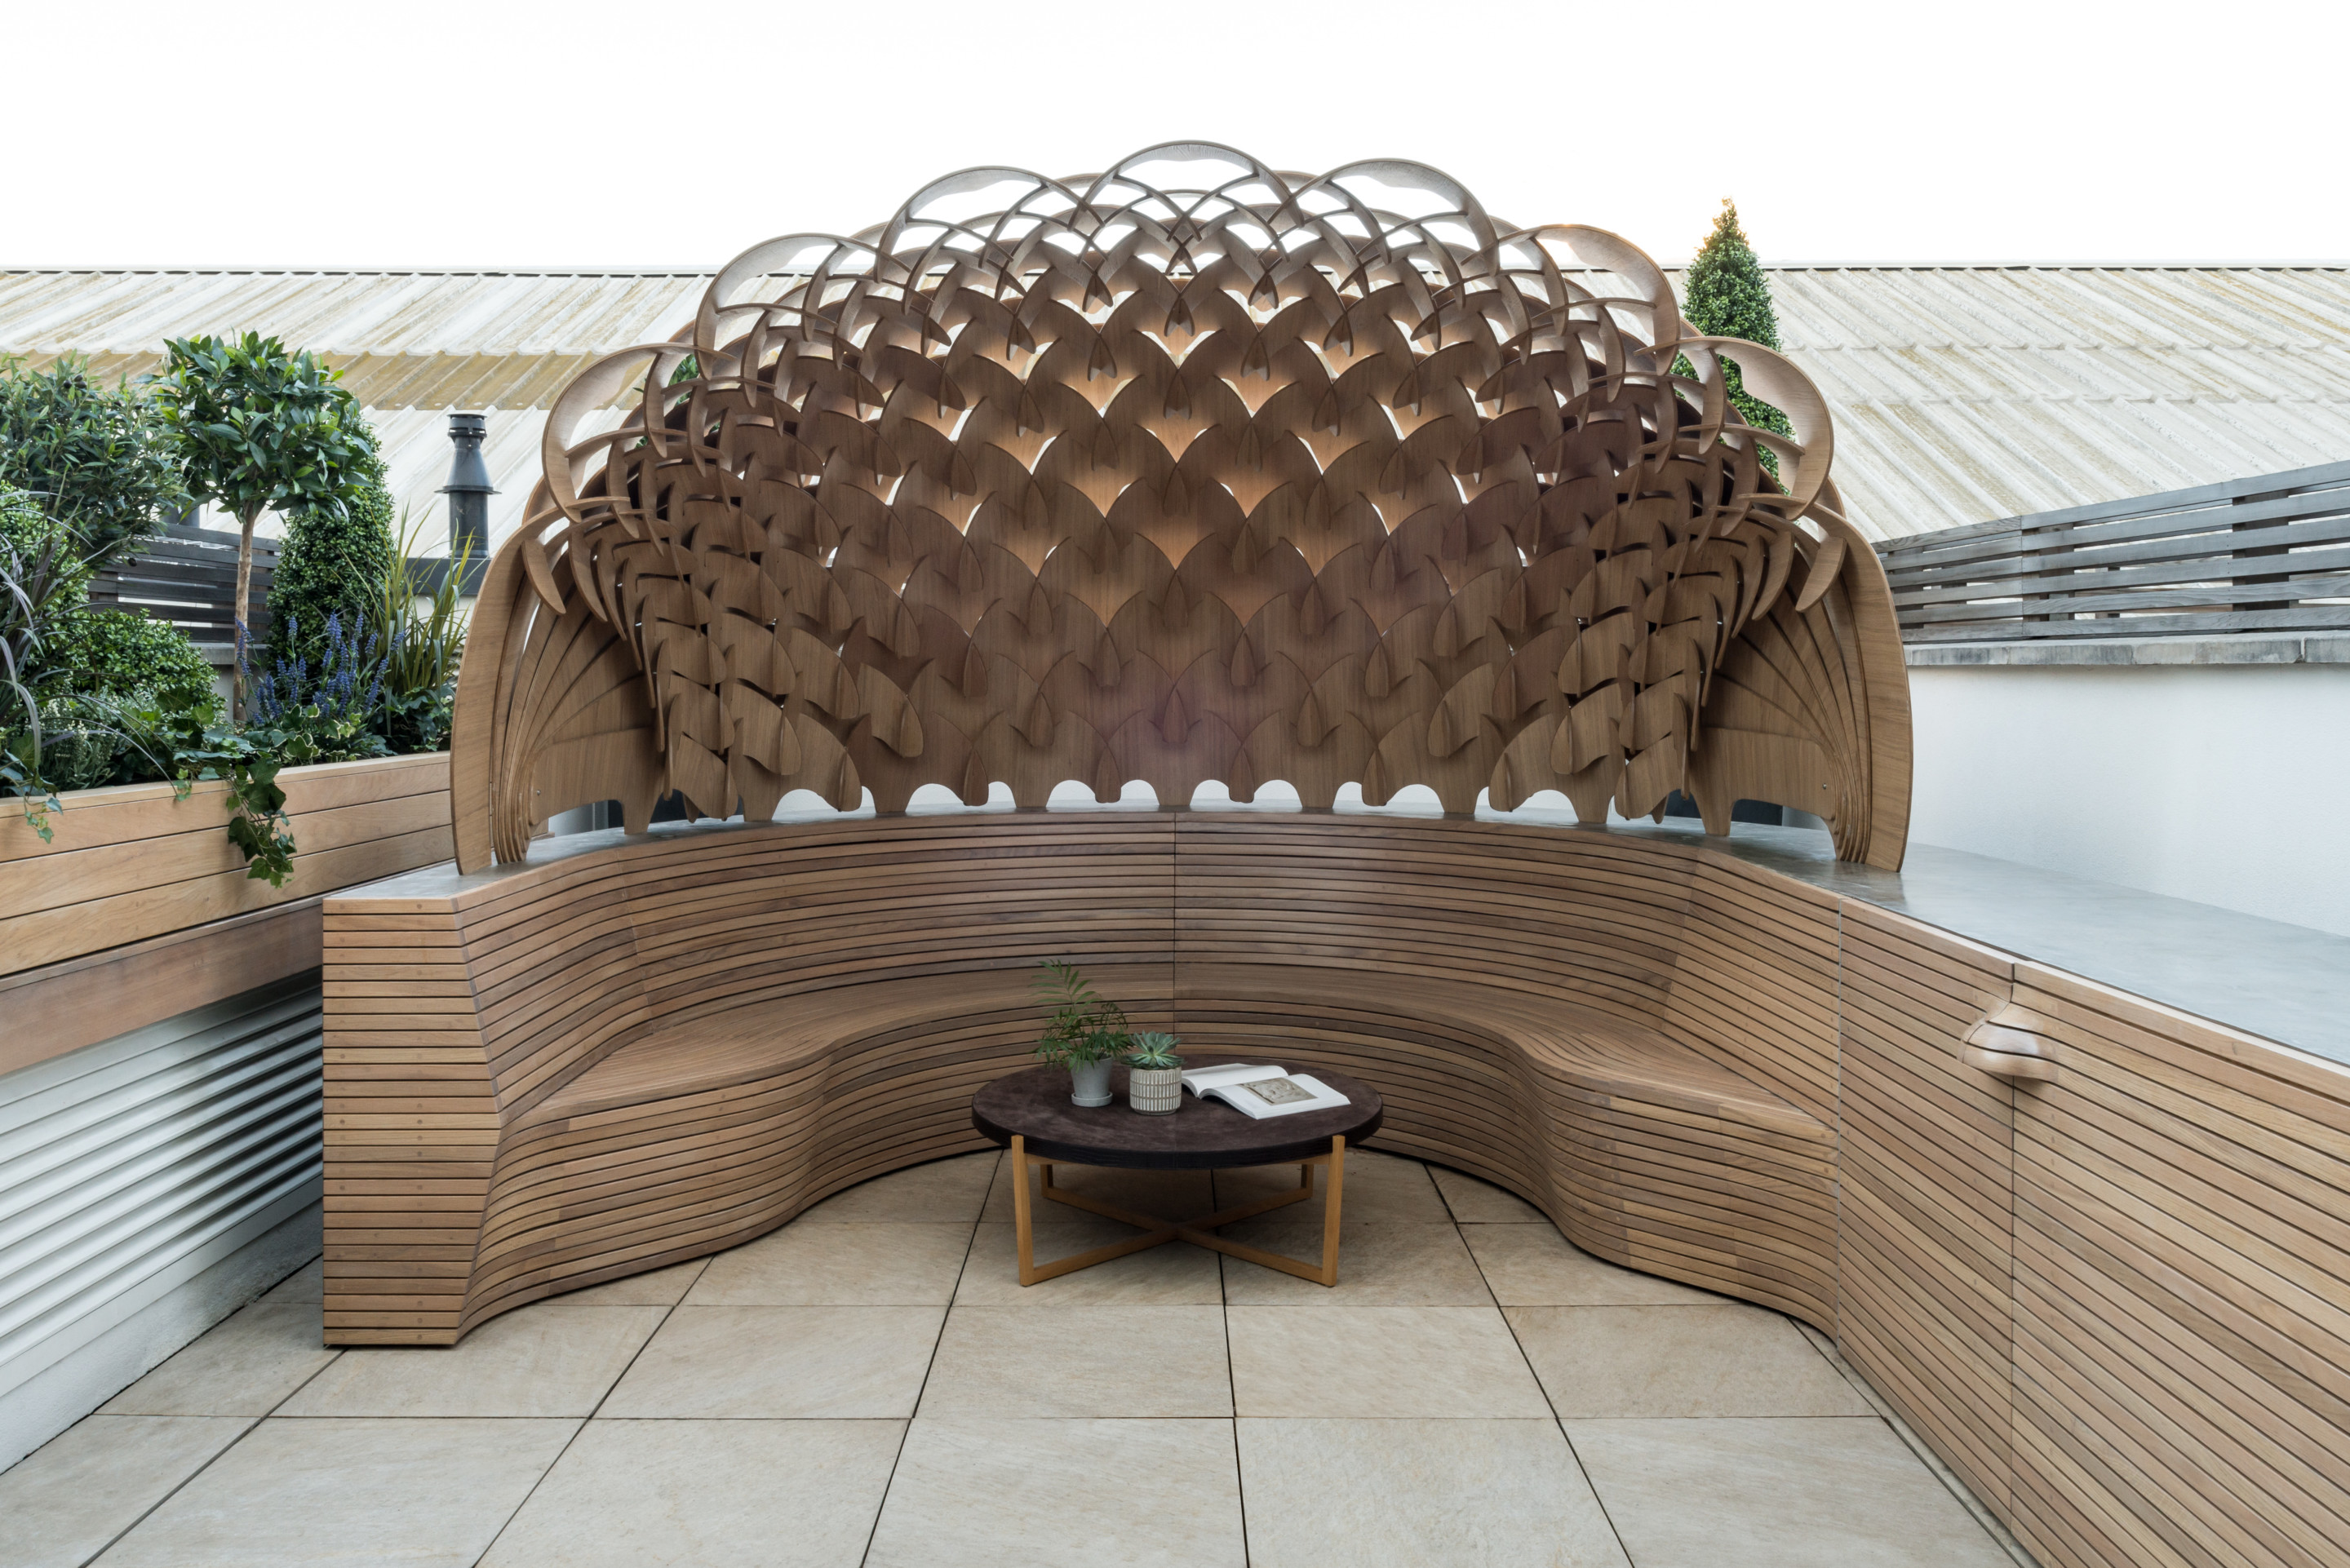 Photo of London Timber Pavilion